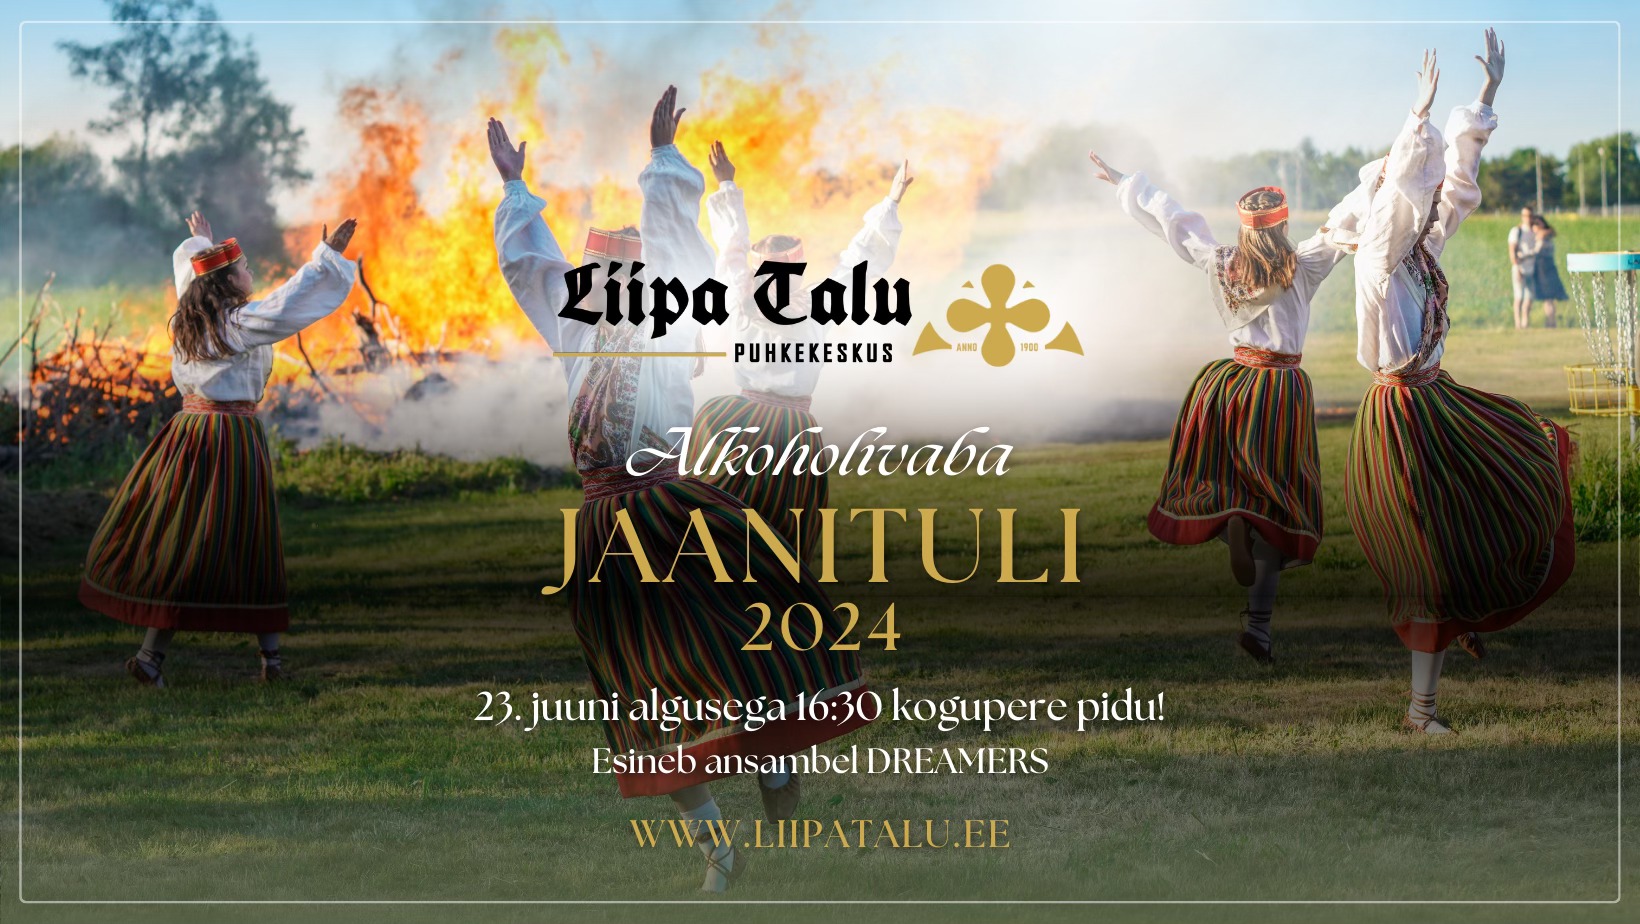 Event Liipa Talu Alkoholivaba Jaanituli 2024  illustratsioon